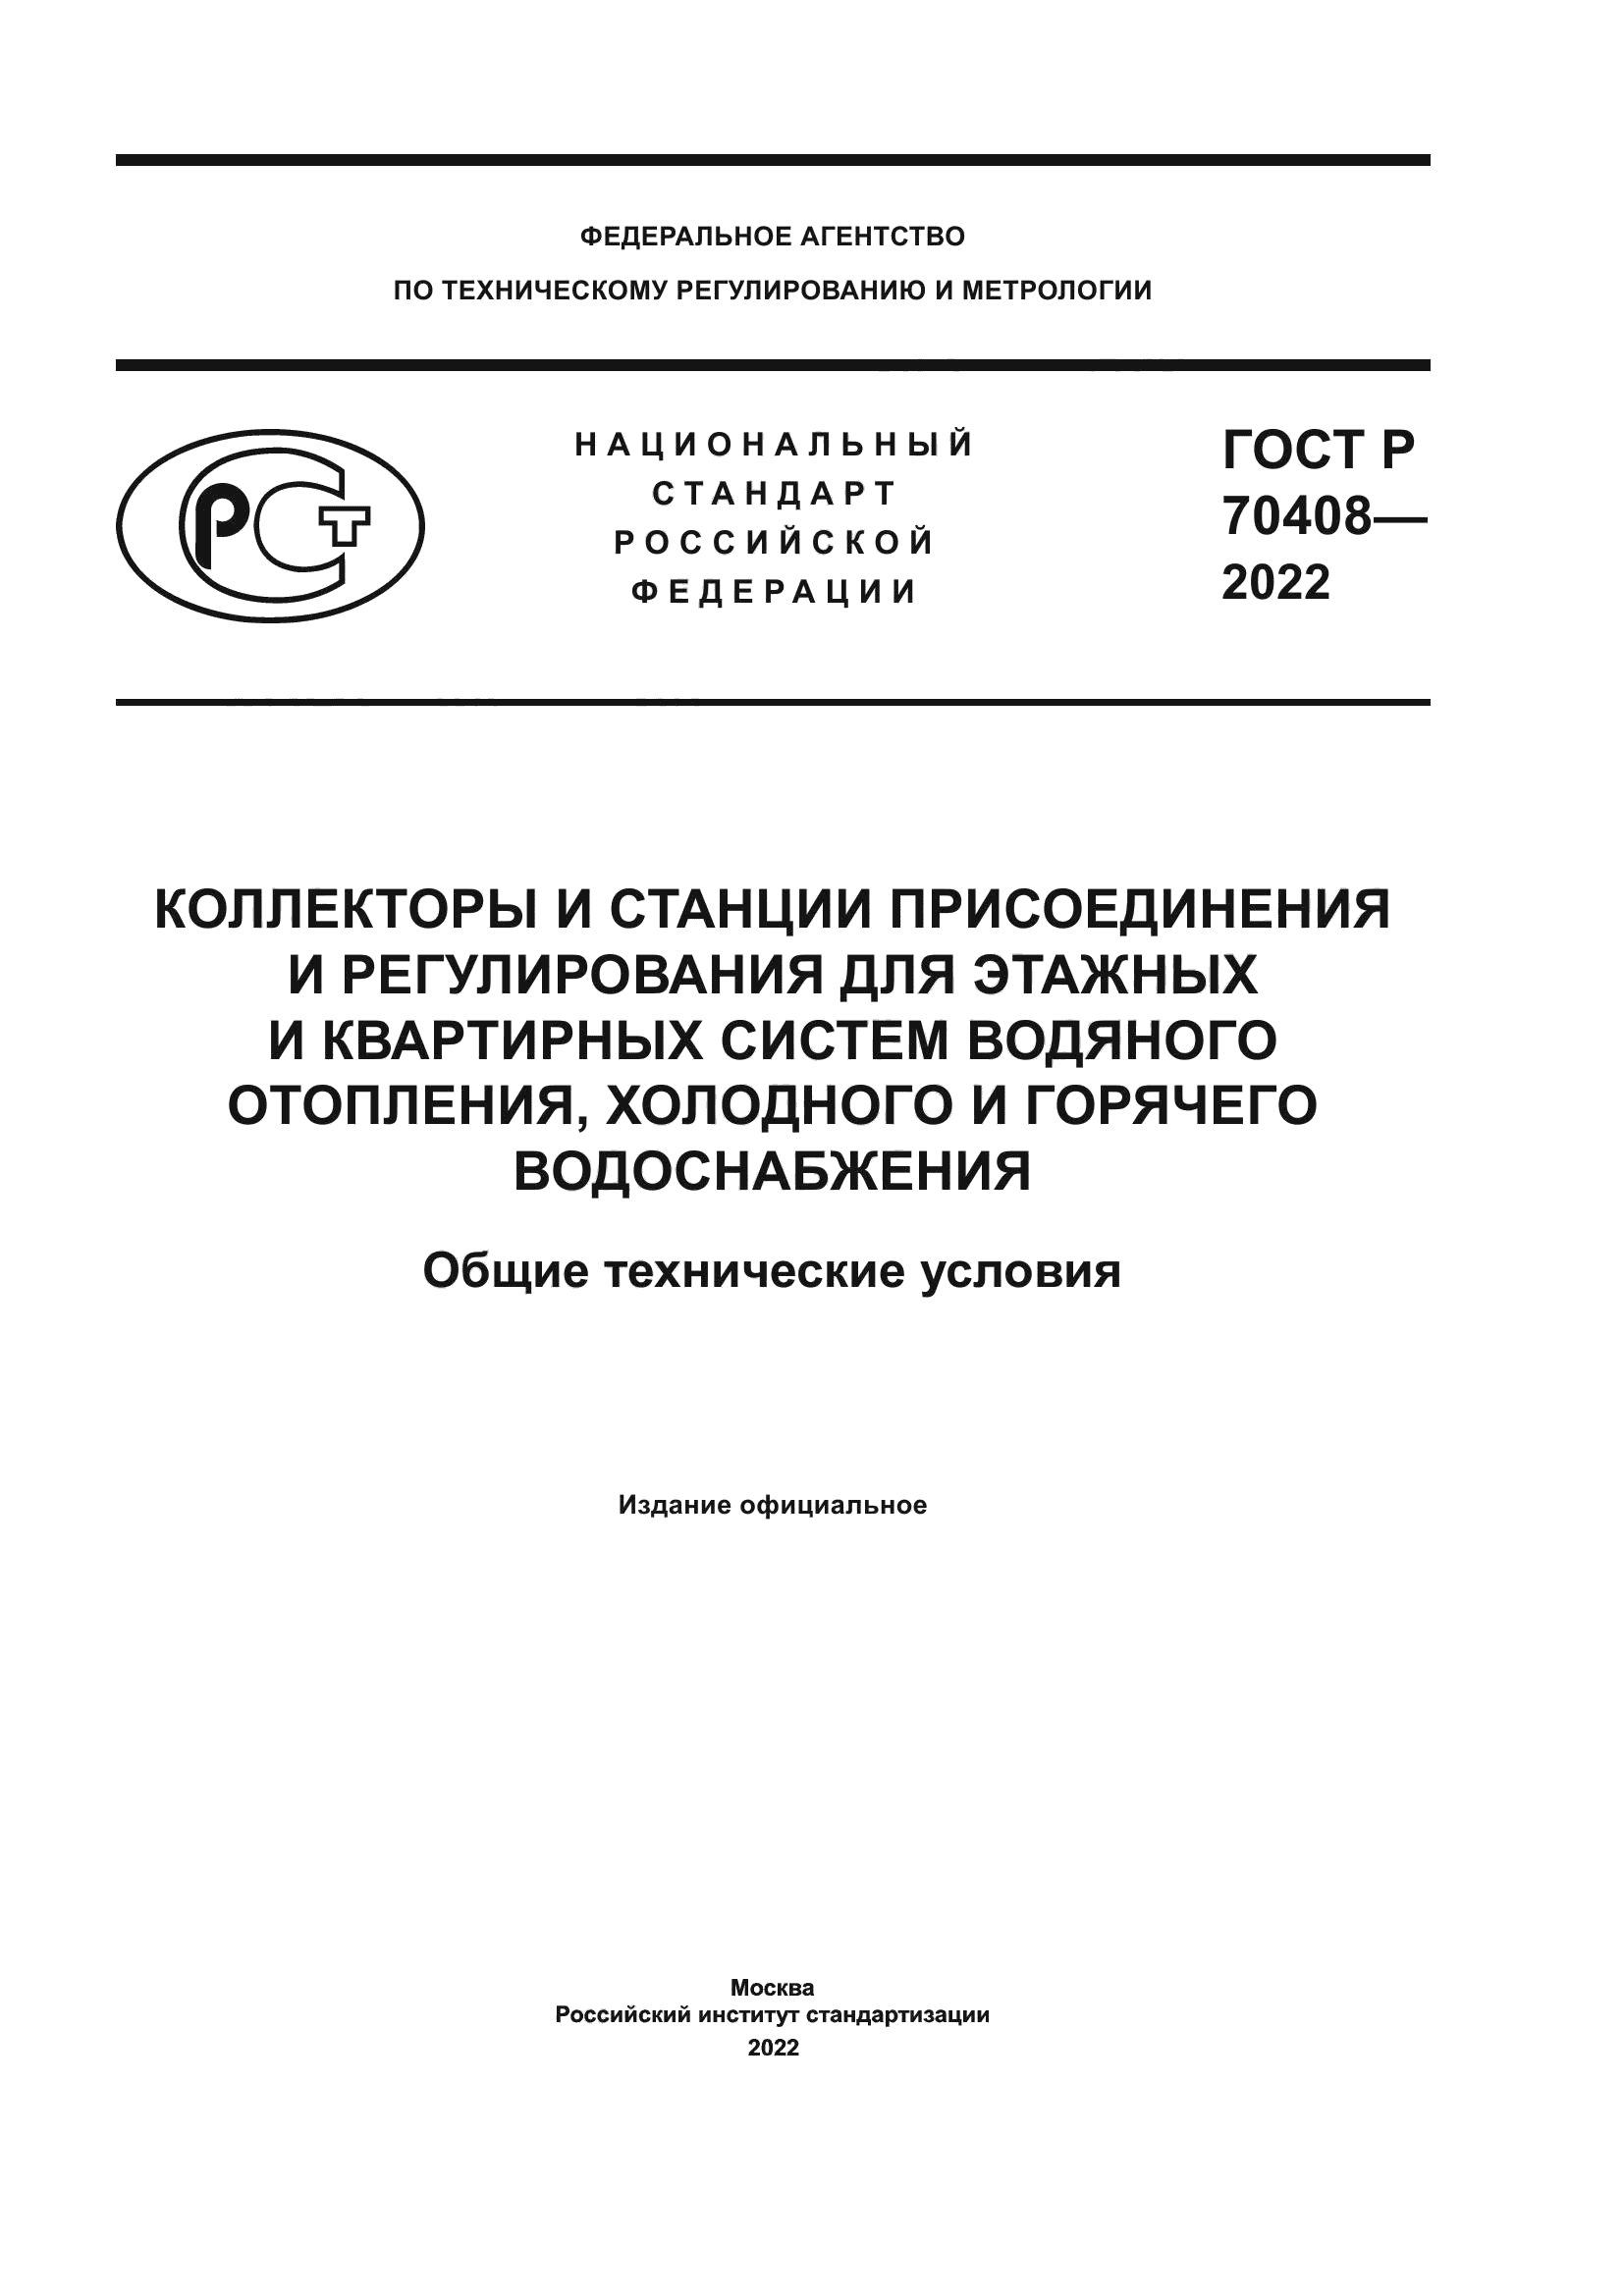 ГОСТ Р 70408-2022